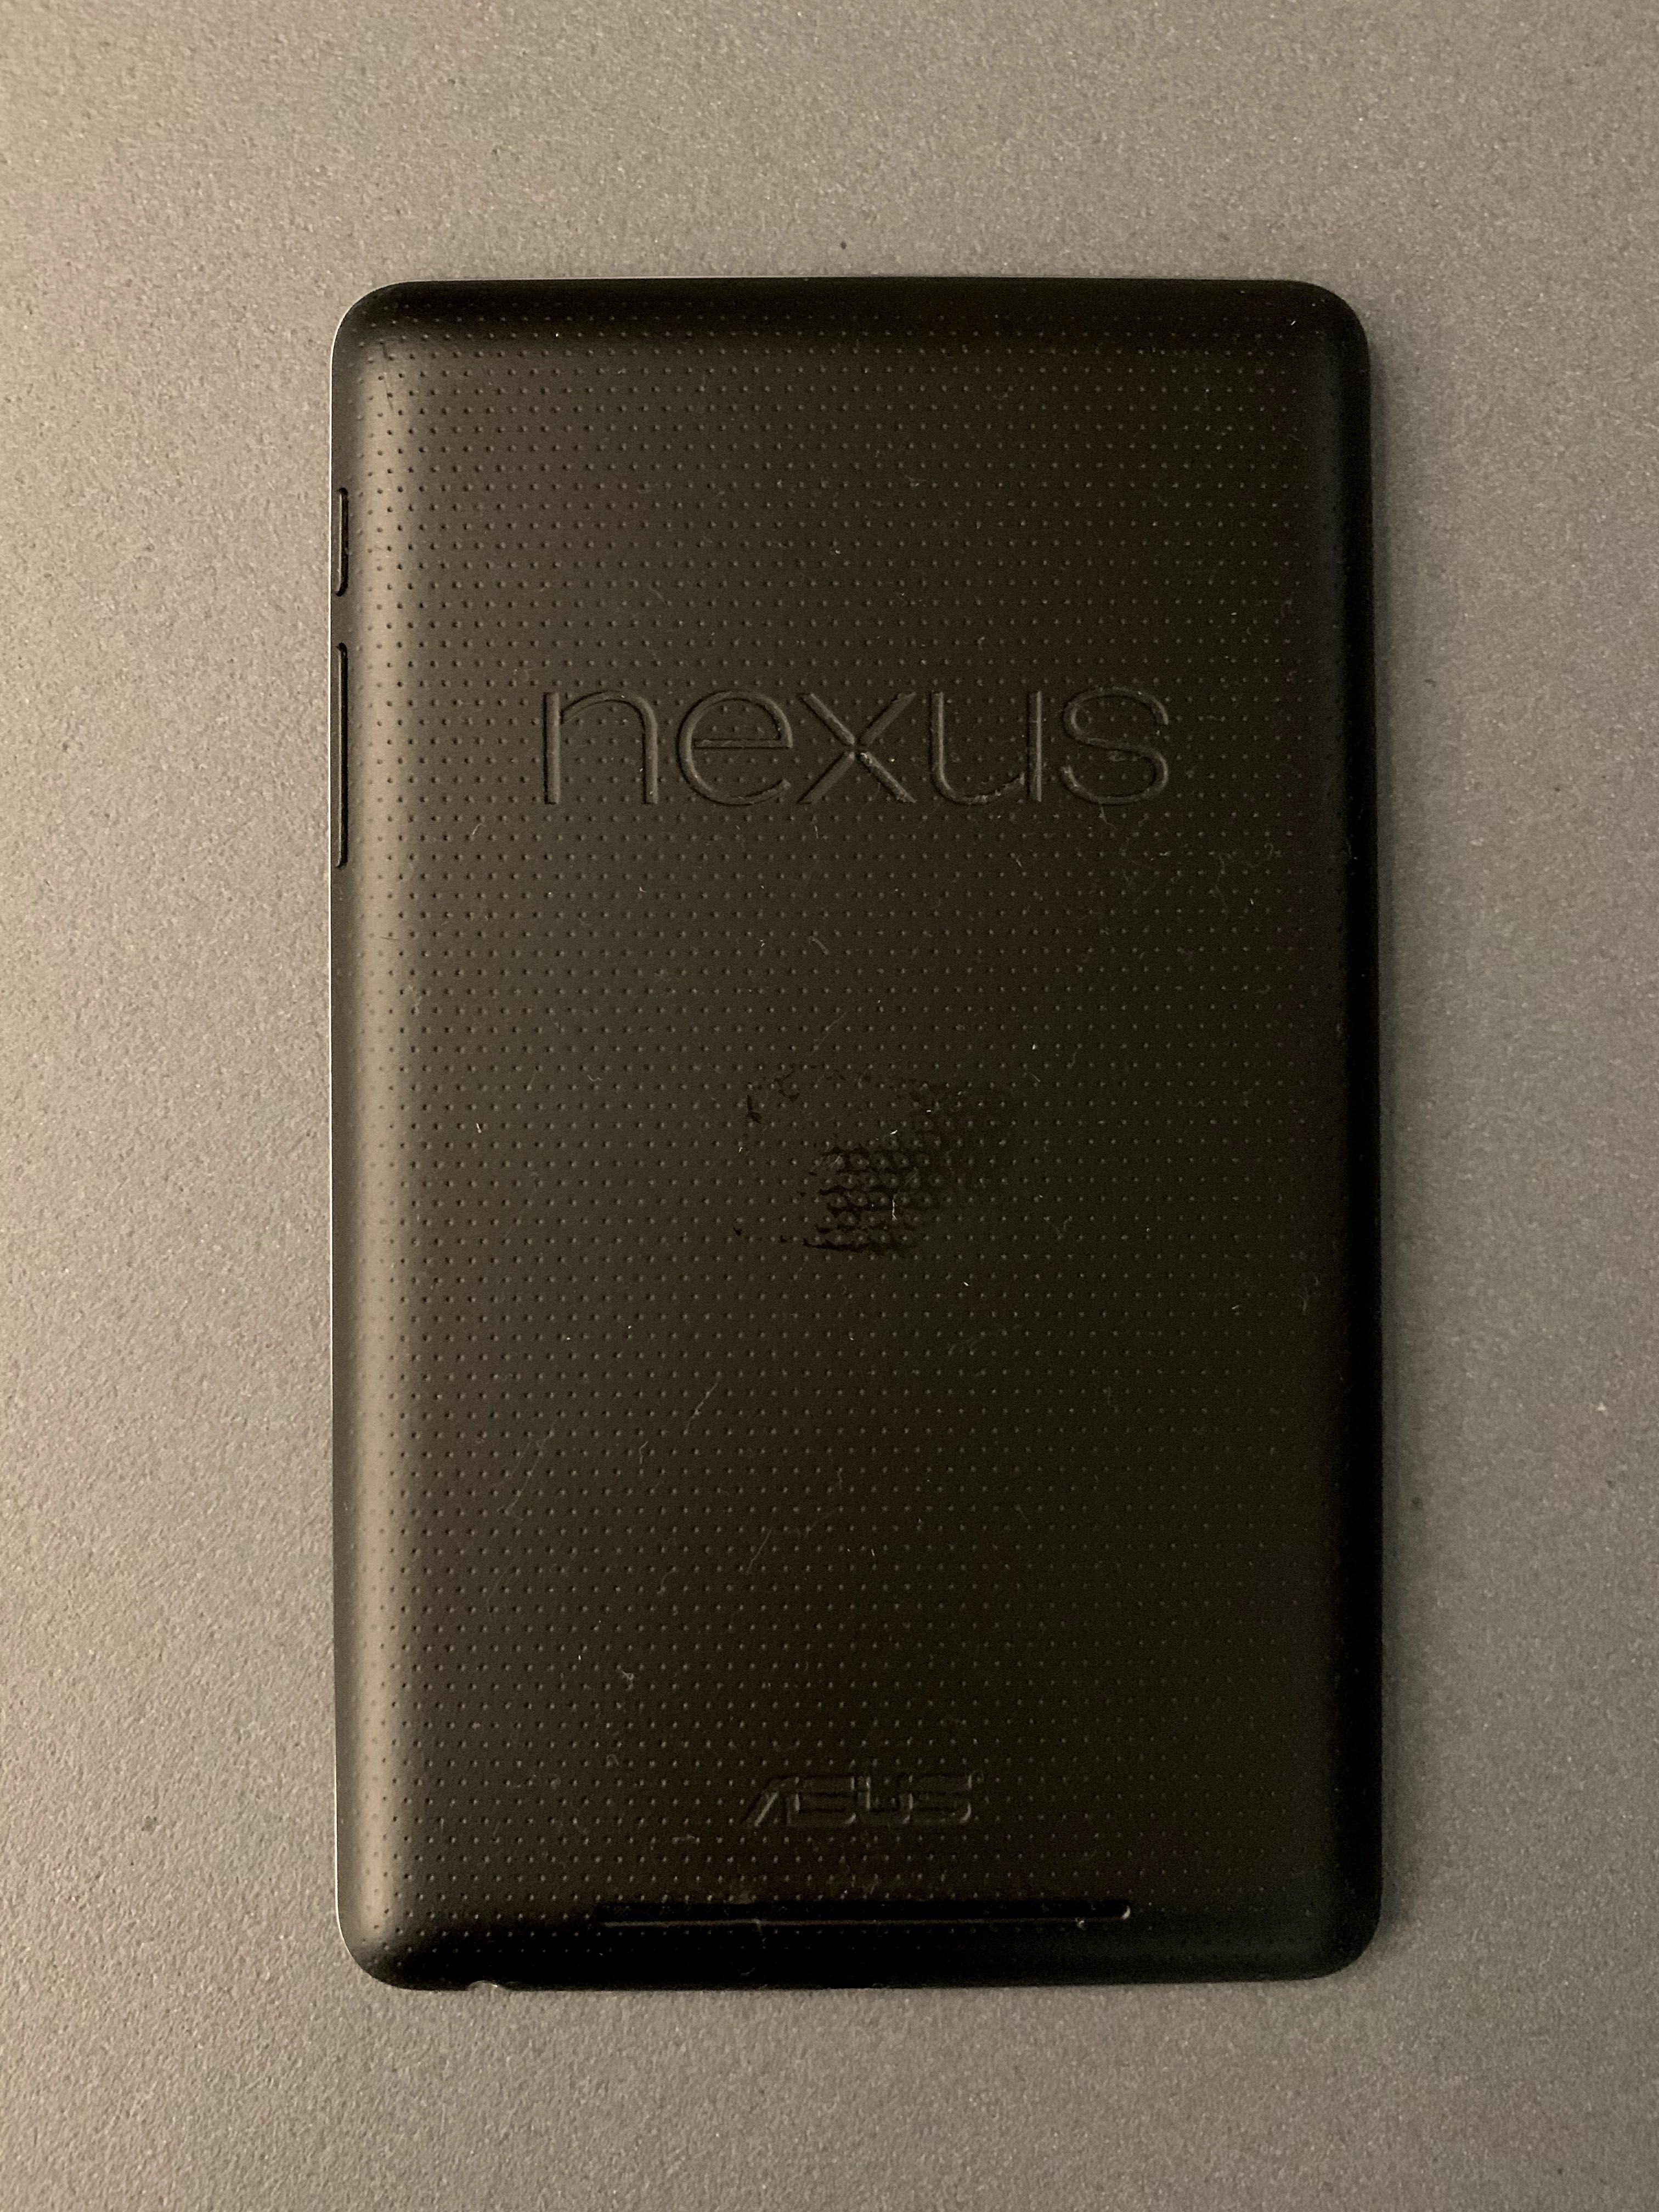 Google Nexus 7, 2012